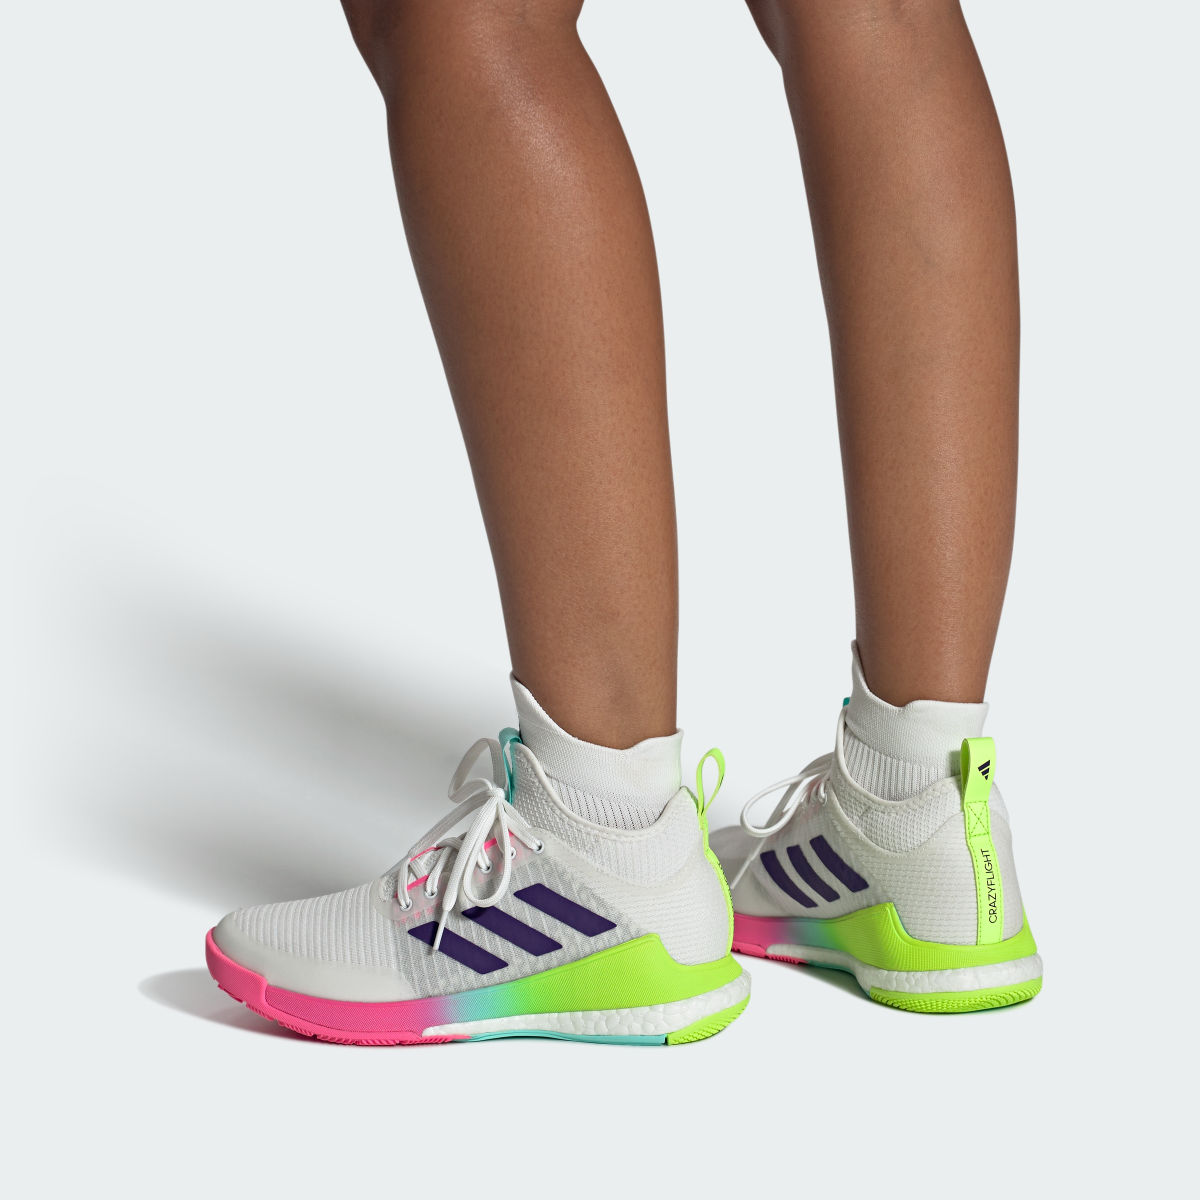 Adidas Crazyflight Mid Shoes. 5